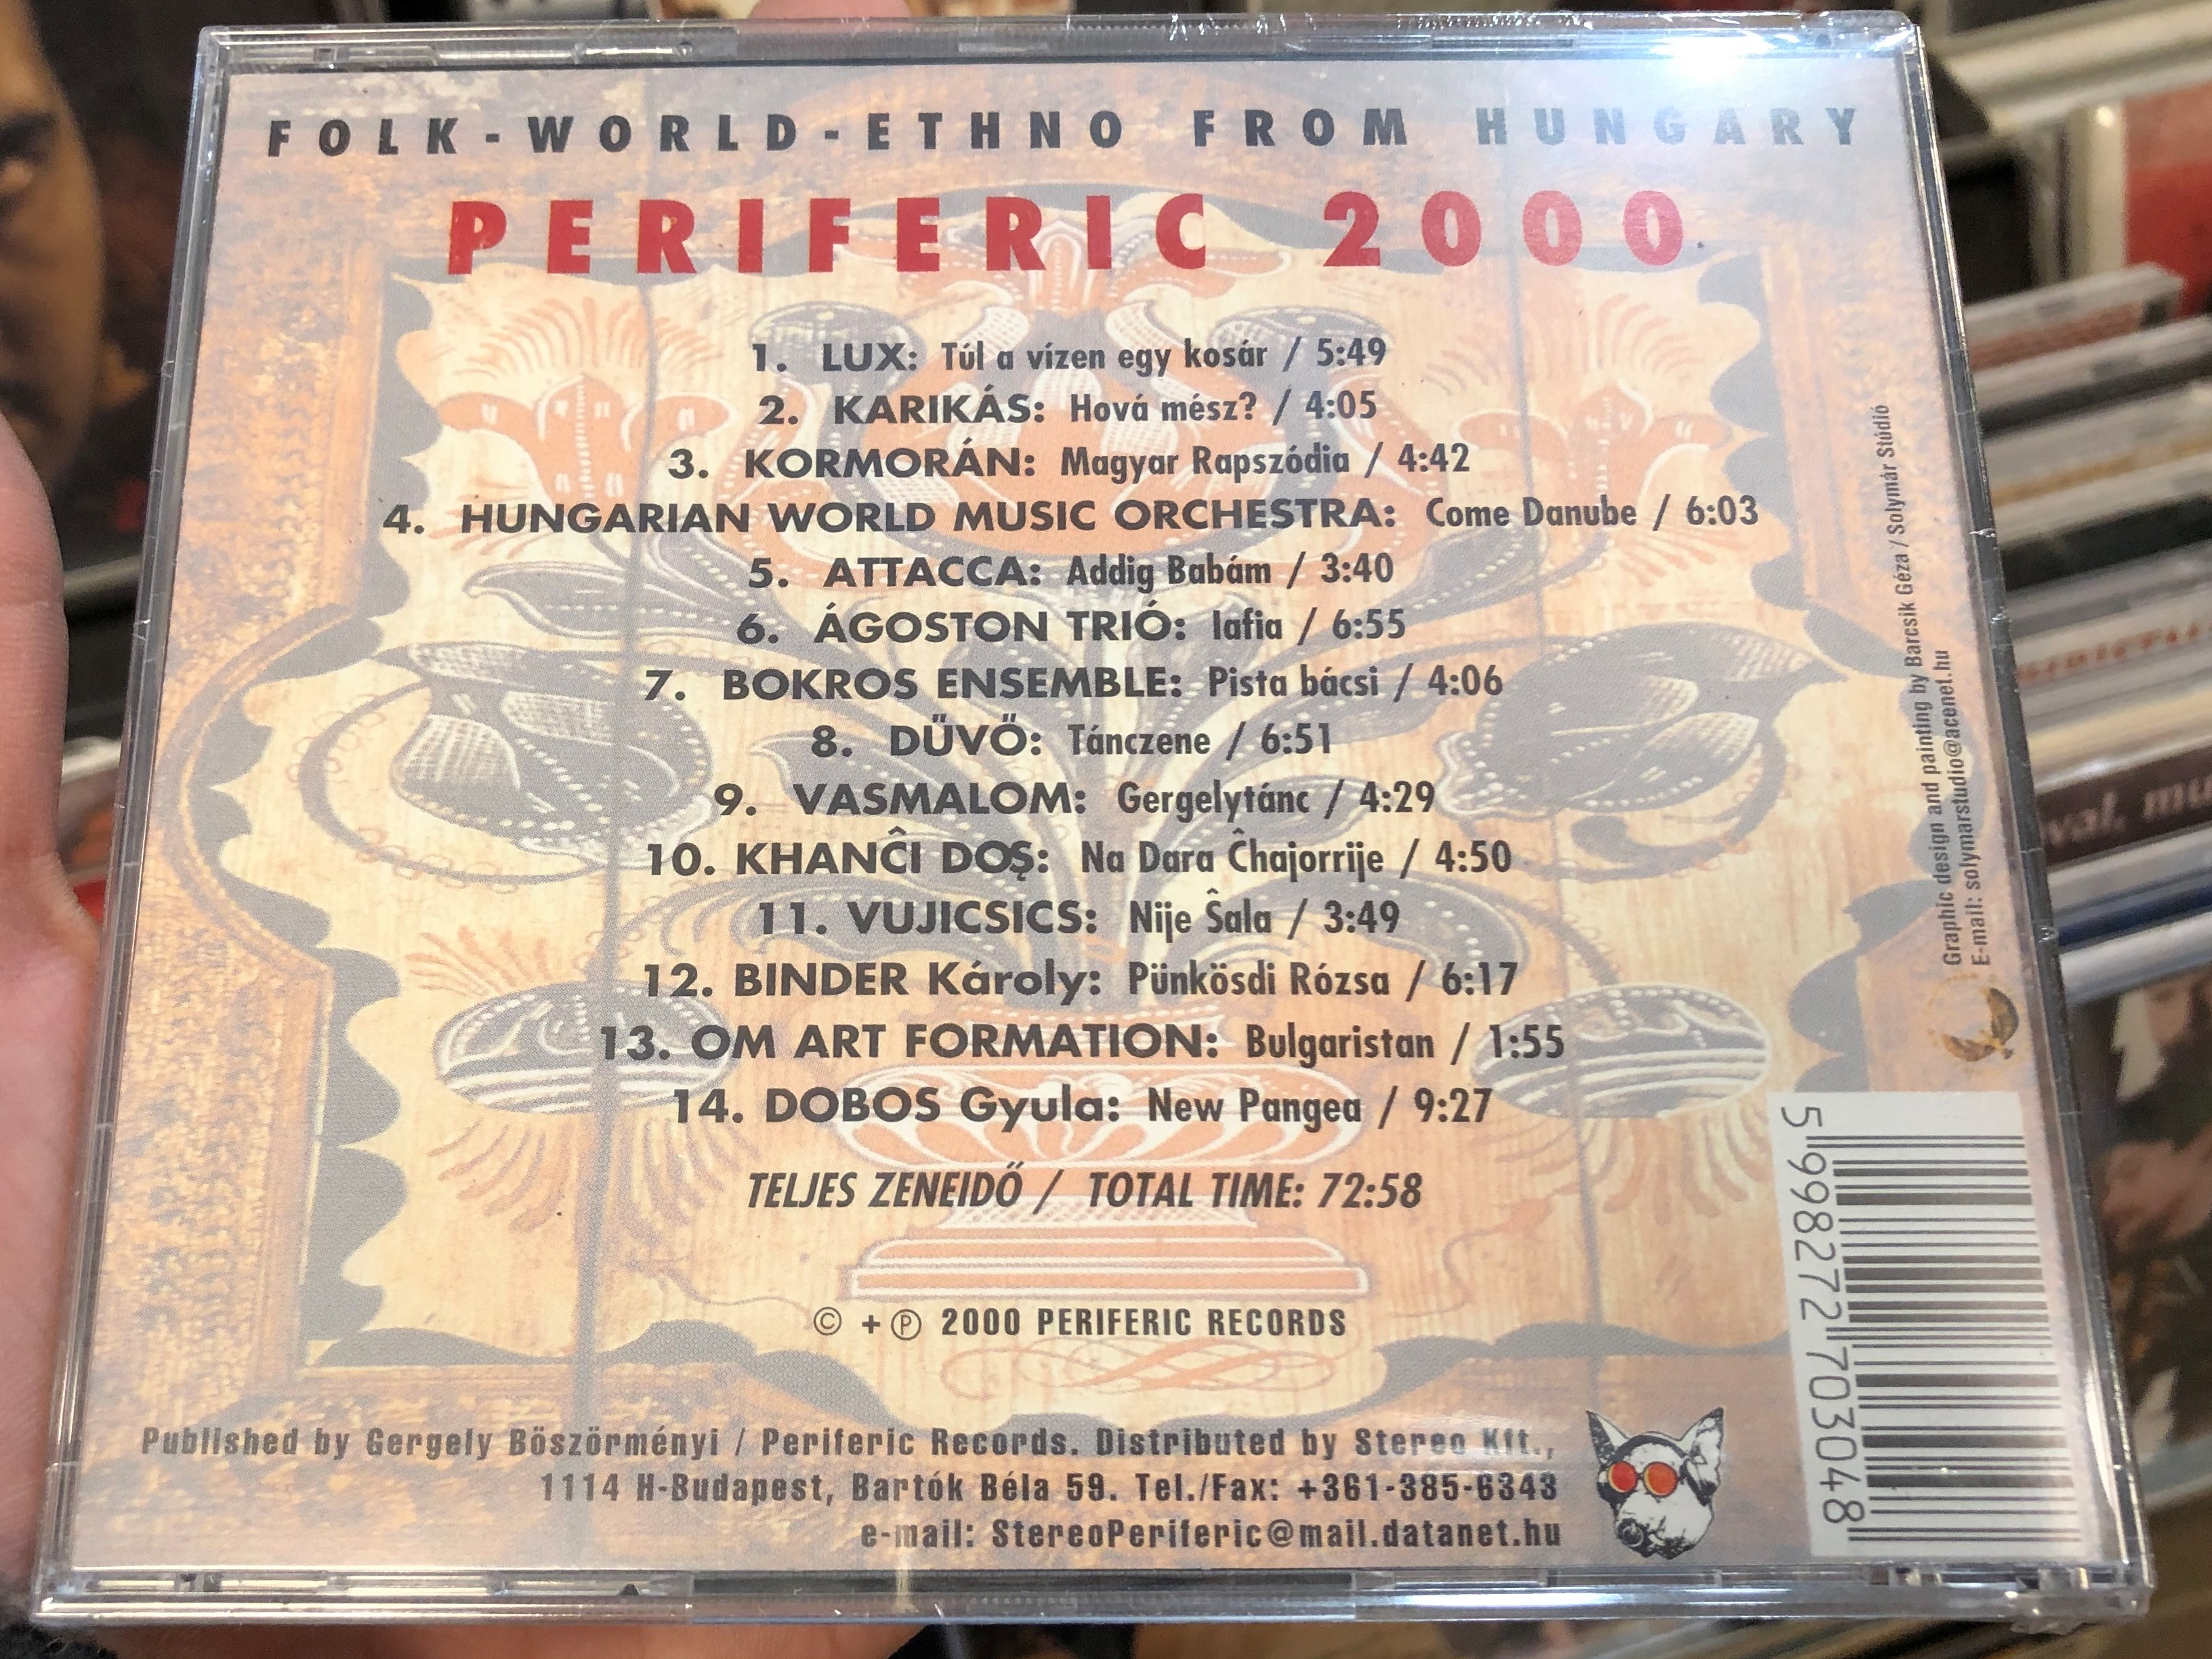 periferic-2000-folk-world-ethno-from-hungary-periferic-records-audio-cd-2000-bgcd-052-2-.jpg